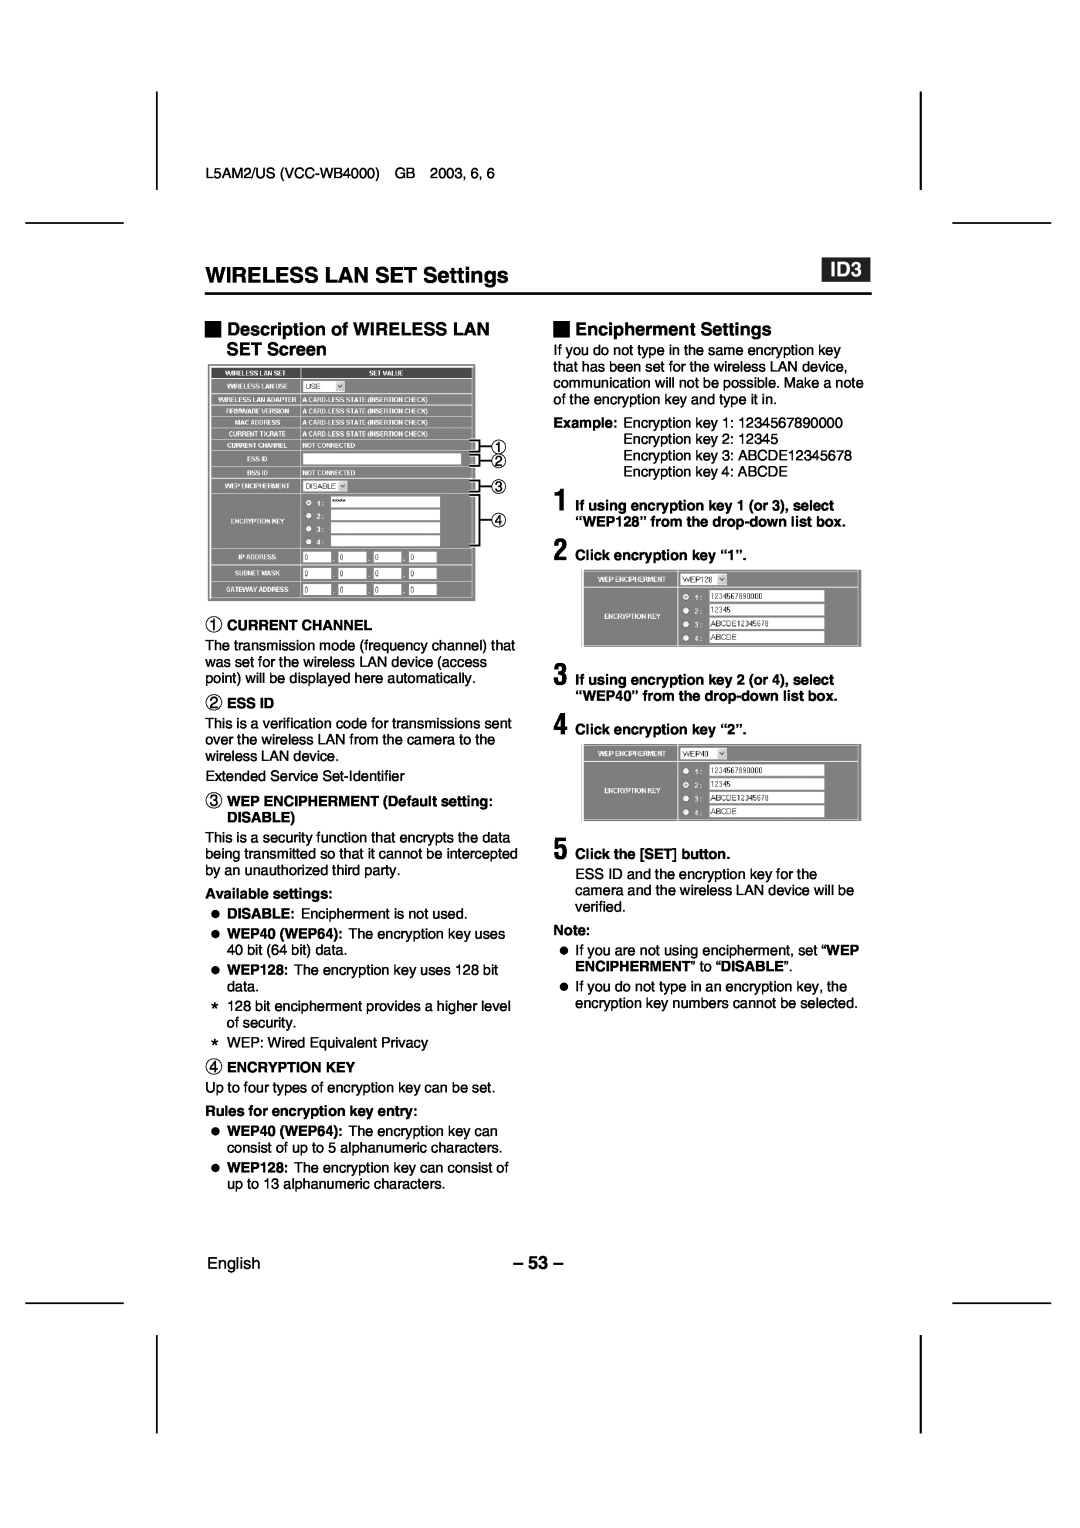 Sanyo VCC-WB4000 Description of WIRELESS LAN SET Screen, Encipherment Settings, Current Channel, Ess Id, Encryption Key 